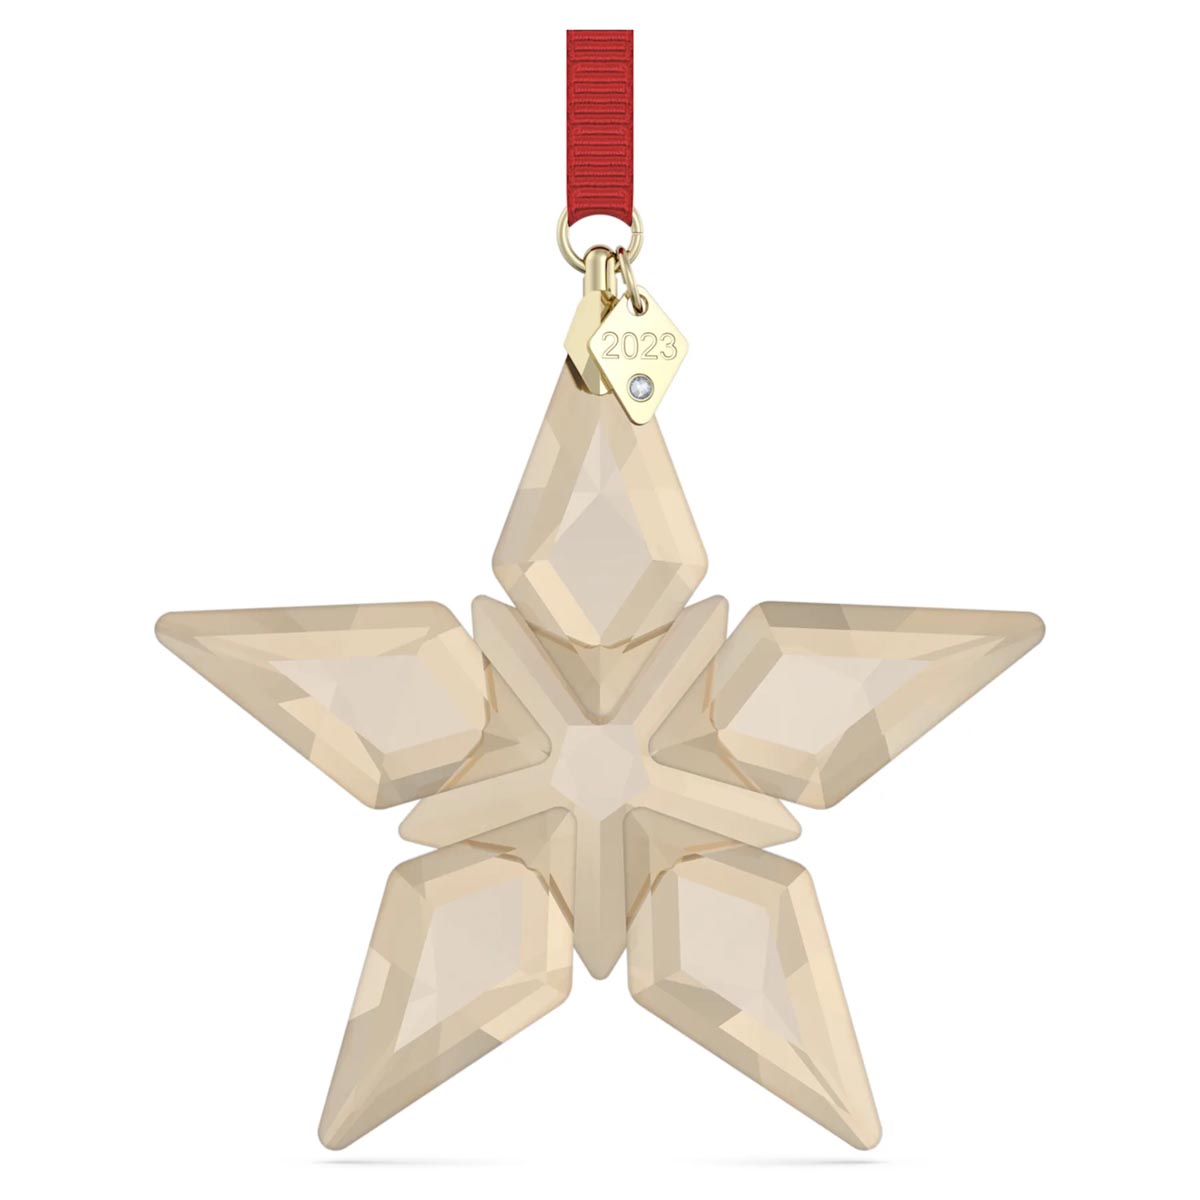 Swarovski Crystal 2023 Annual Edition Festive Star Ornament